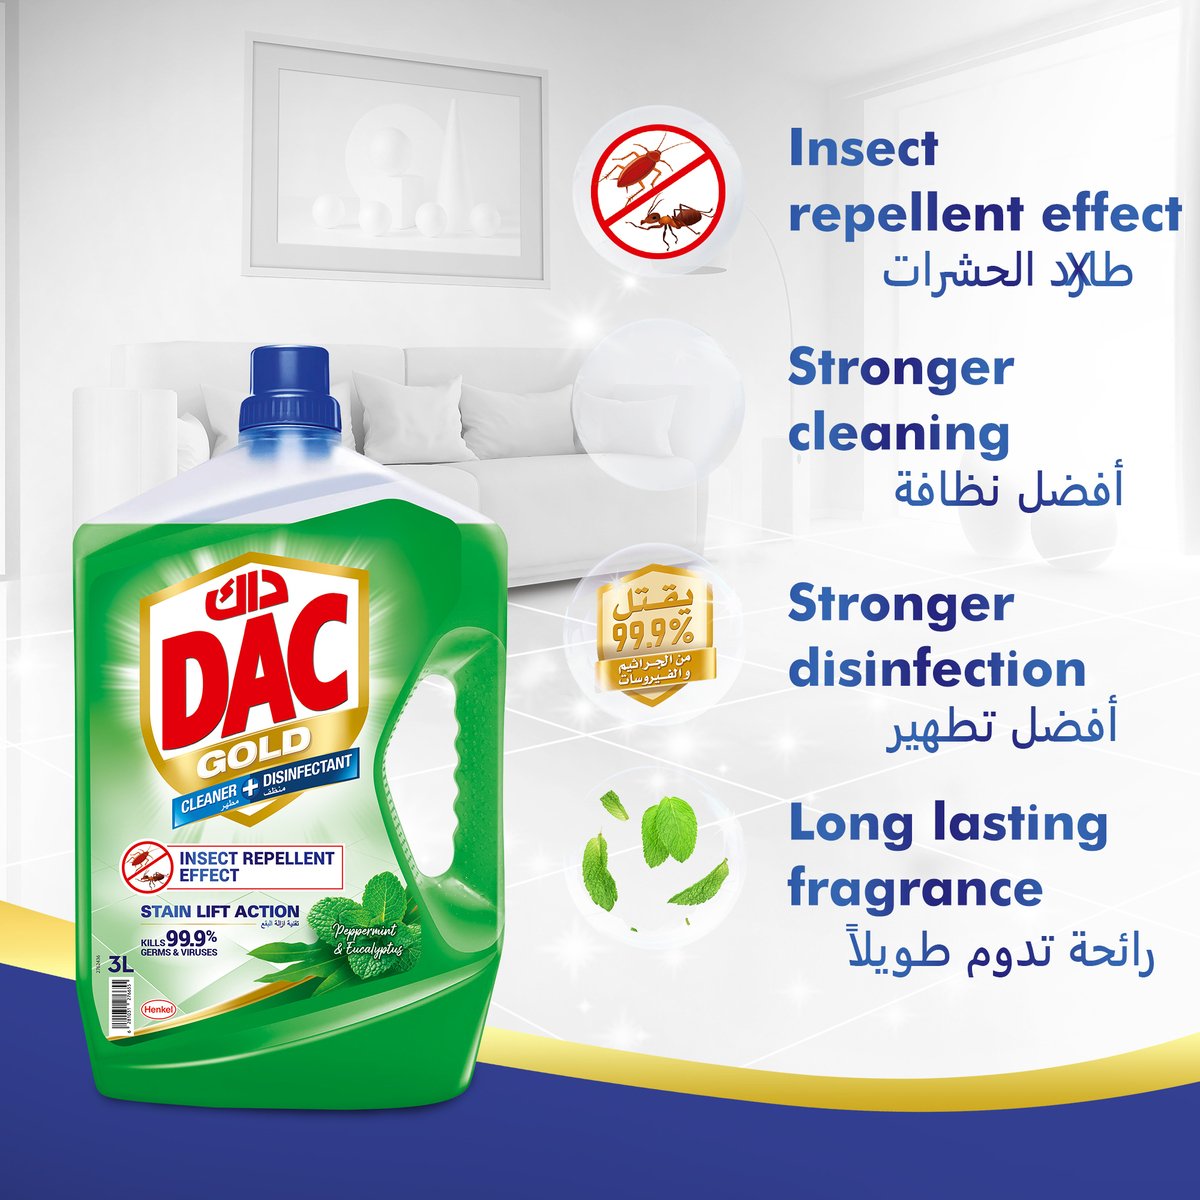 Dac Cleaner Disinfectant Peppermint & Eucalyptus 3 Litres + 1 Litre